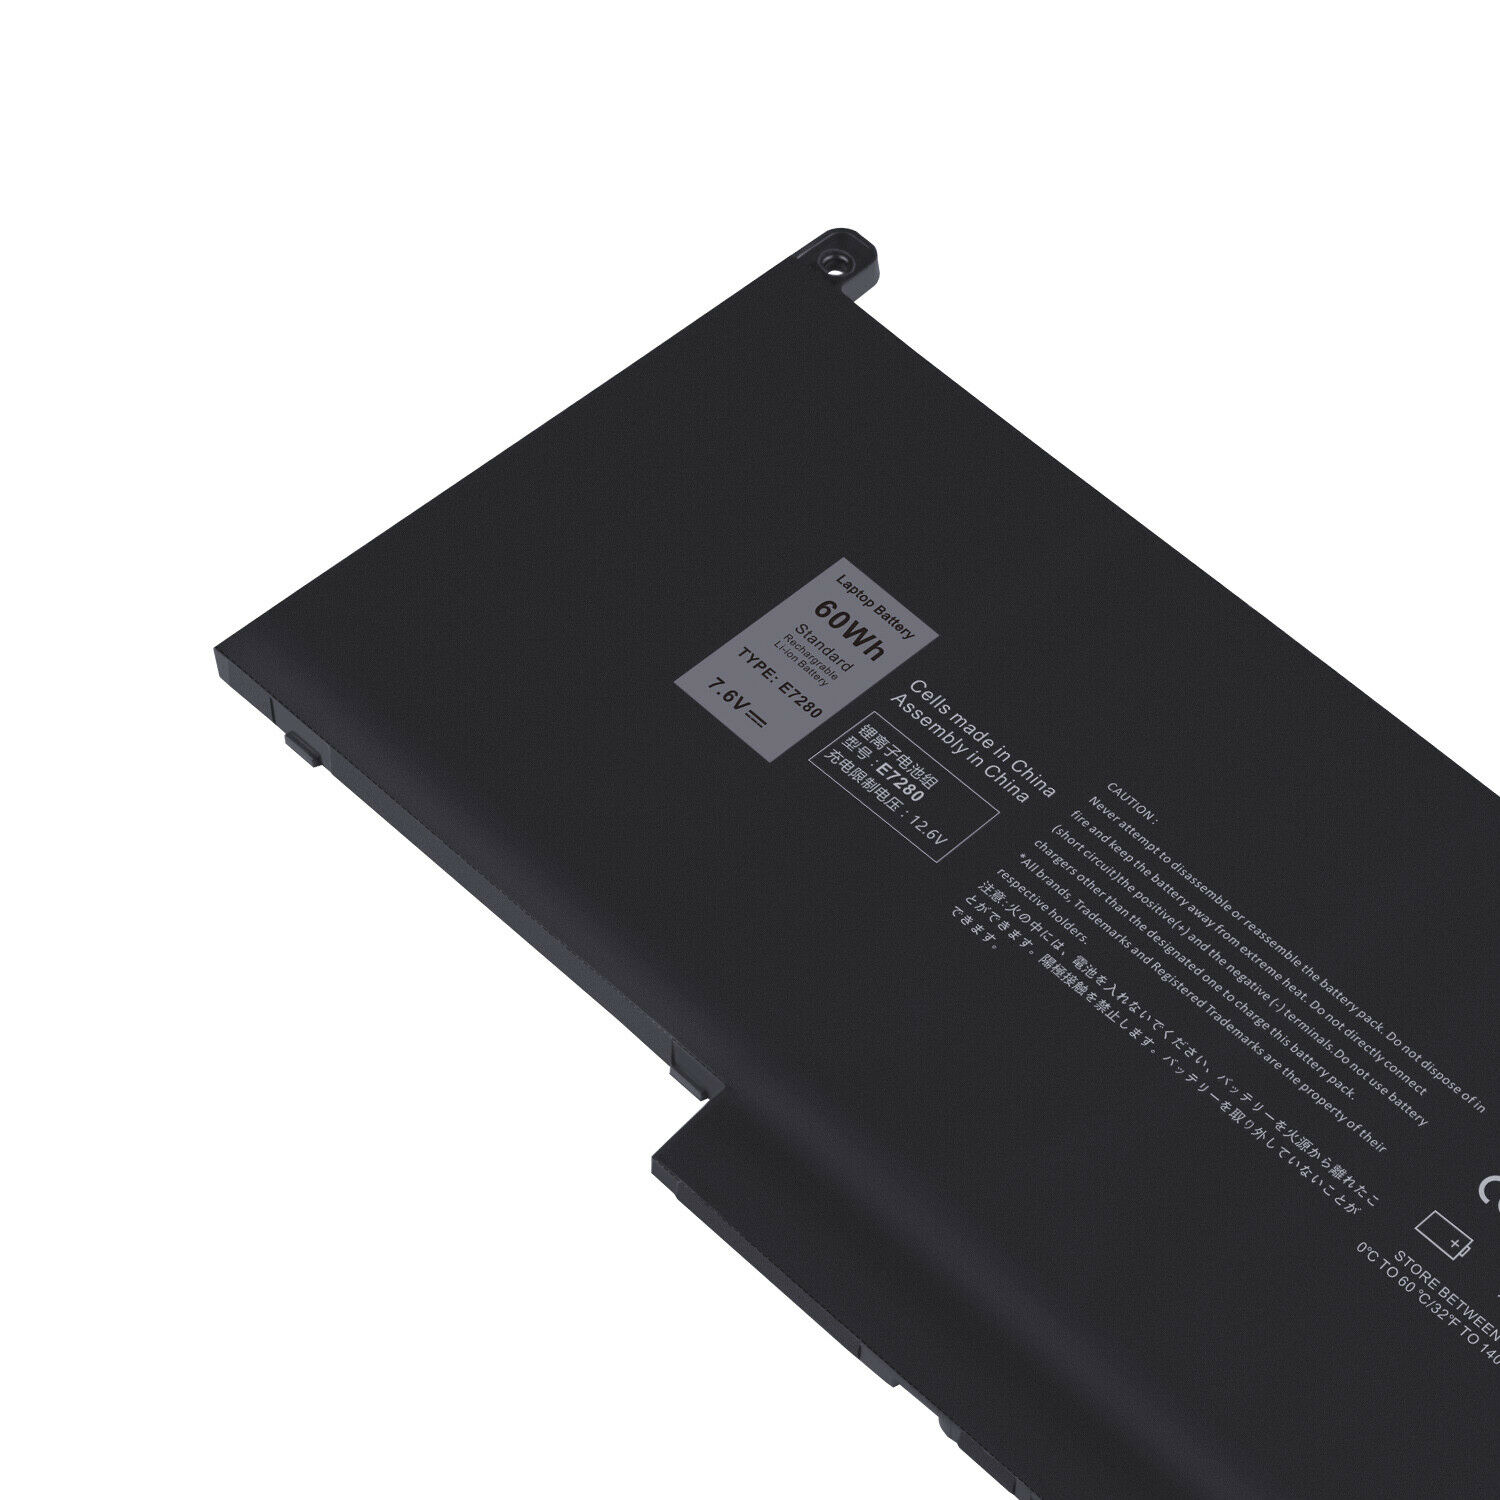 Dell Latitude 12 7000 7280 7480 DM3WC 0DM3WC 2X39G 7.6V F3YGT kompatibelt batterier